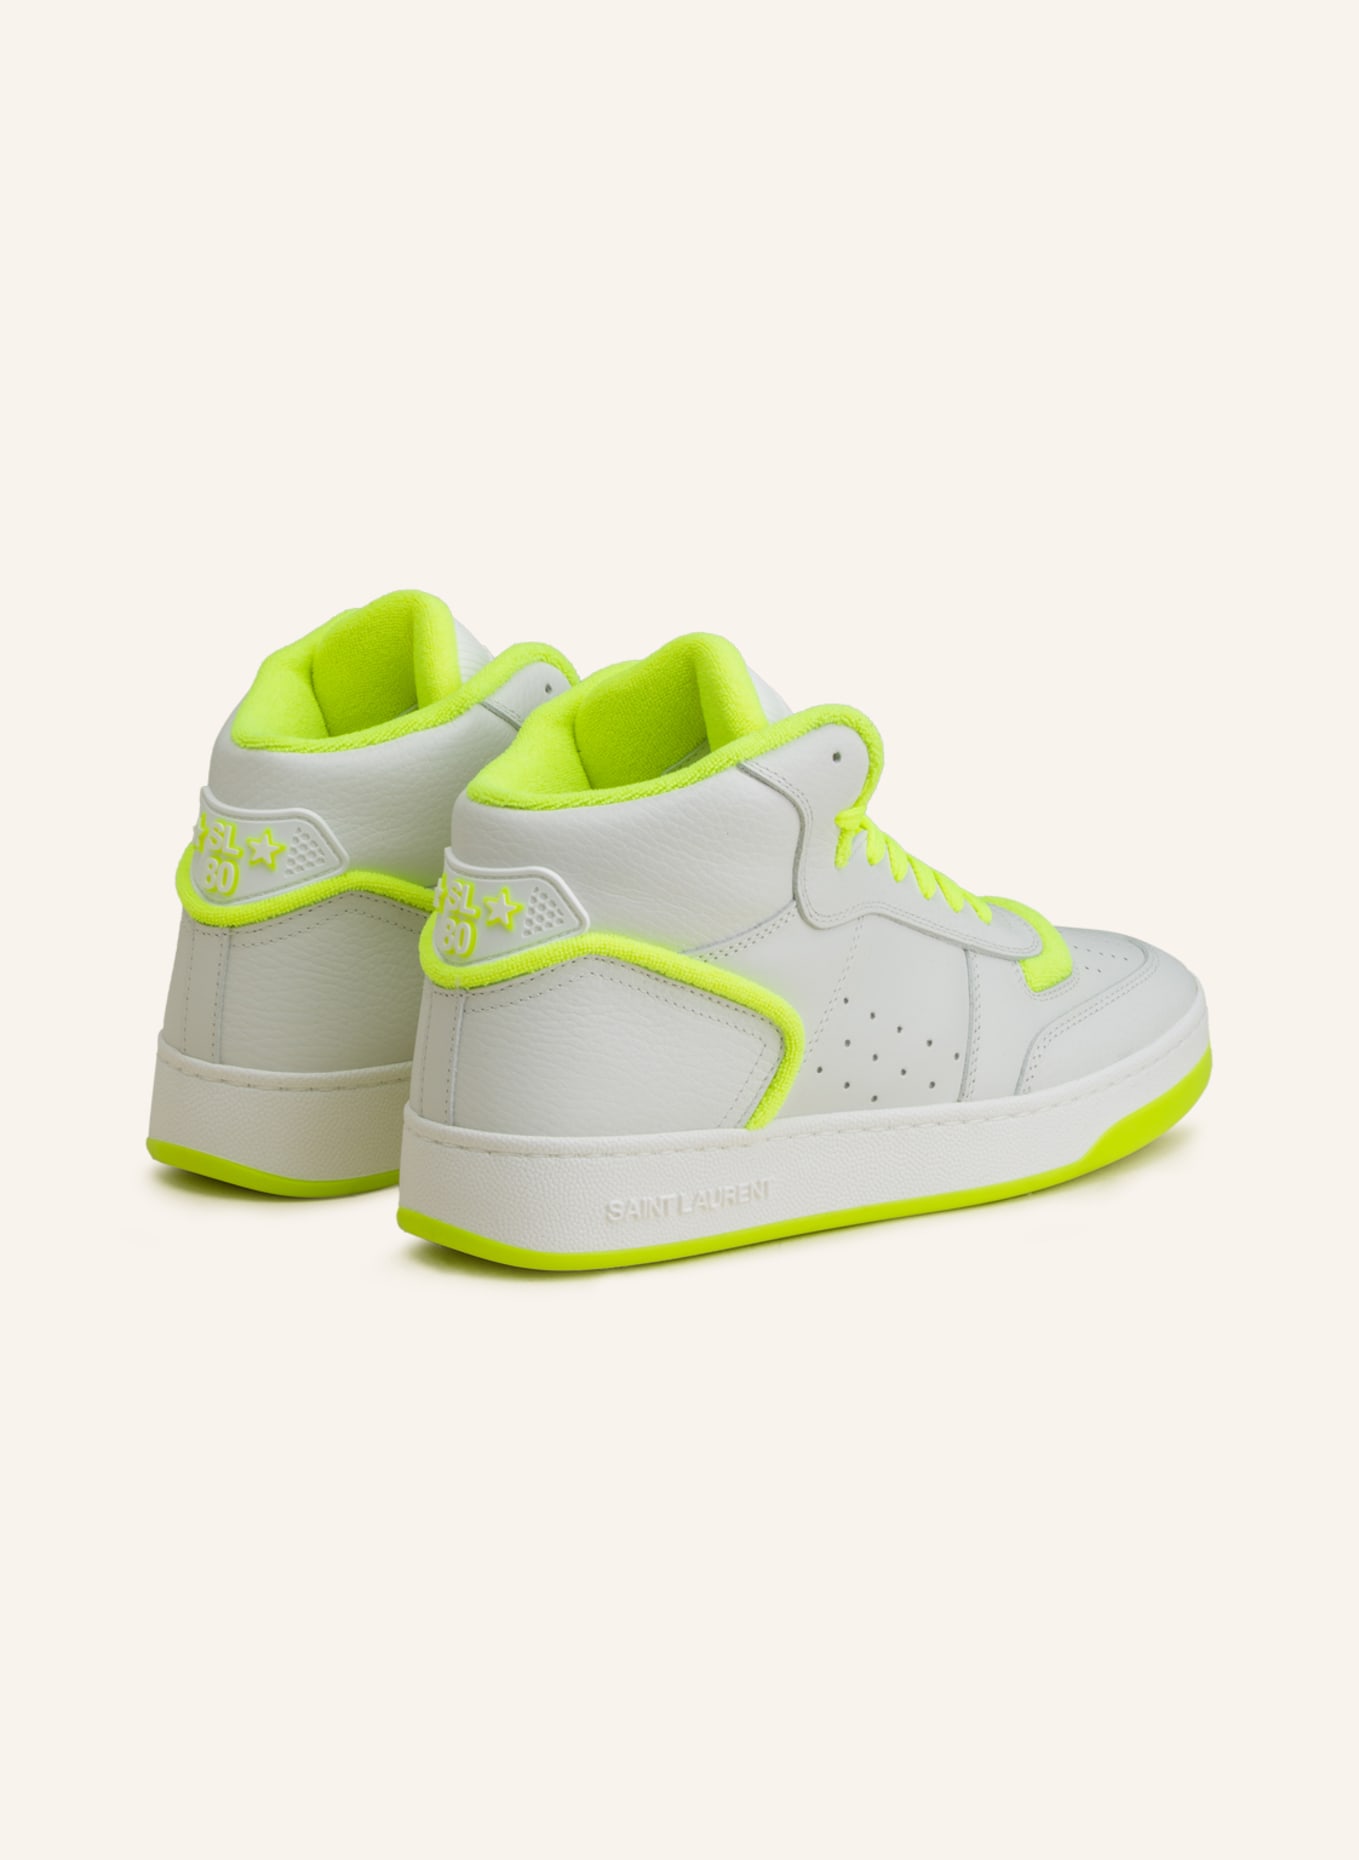 SAINT LAURENT Hightop-Sneaker MERID, Farbe: WEISS (Bild 2)